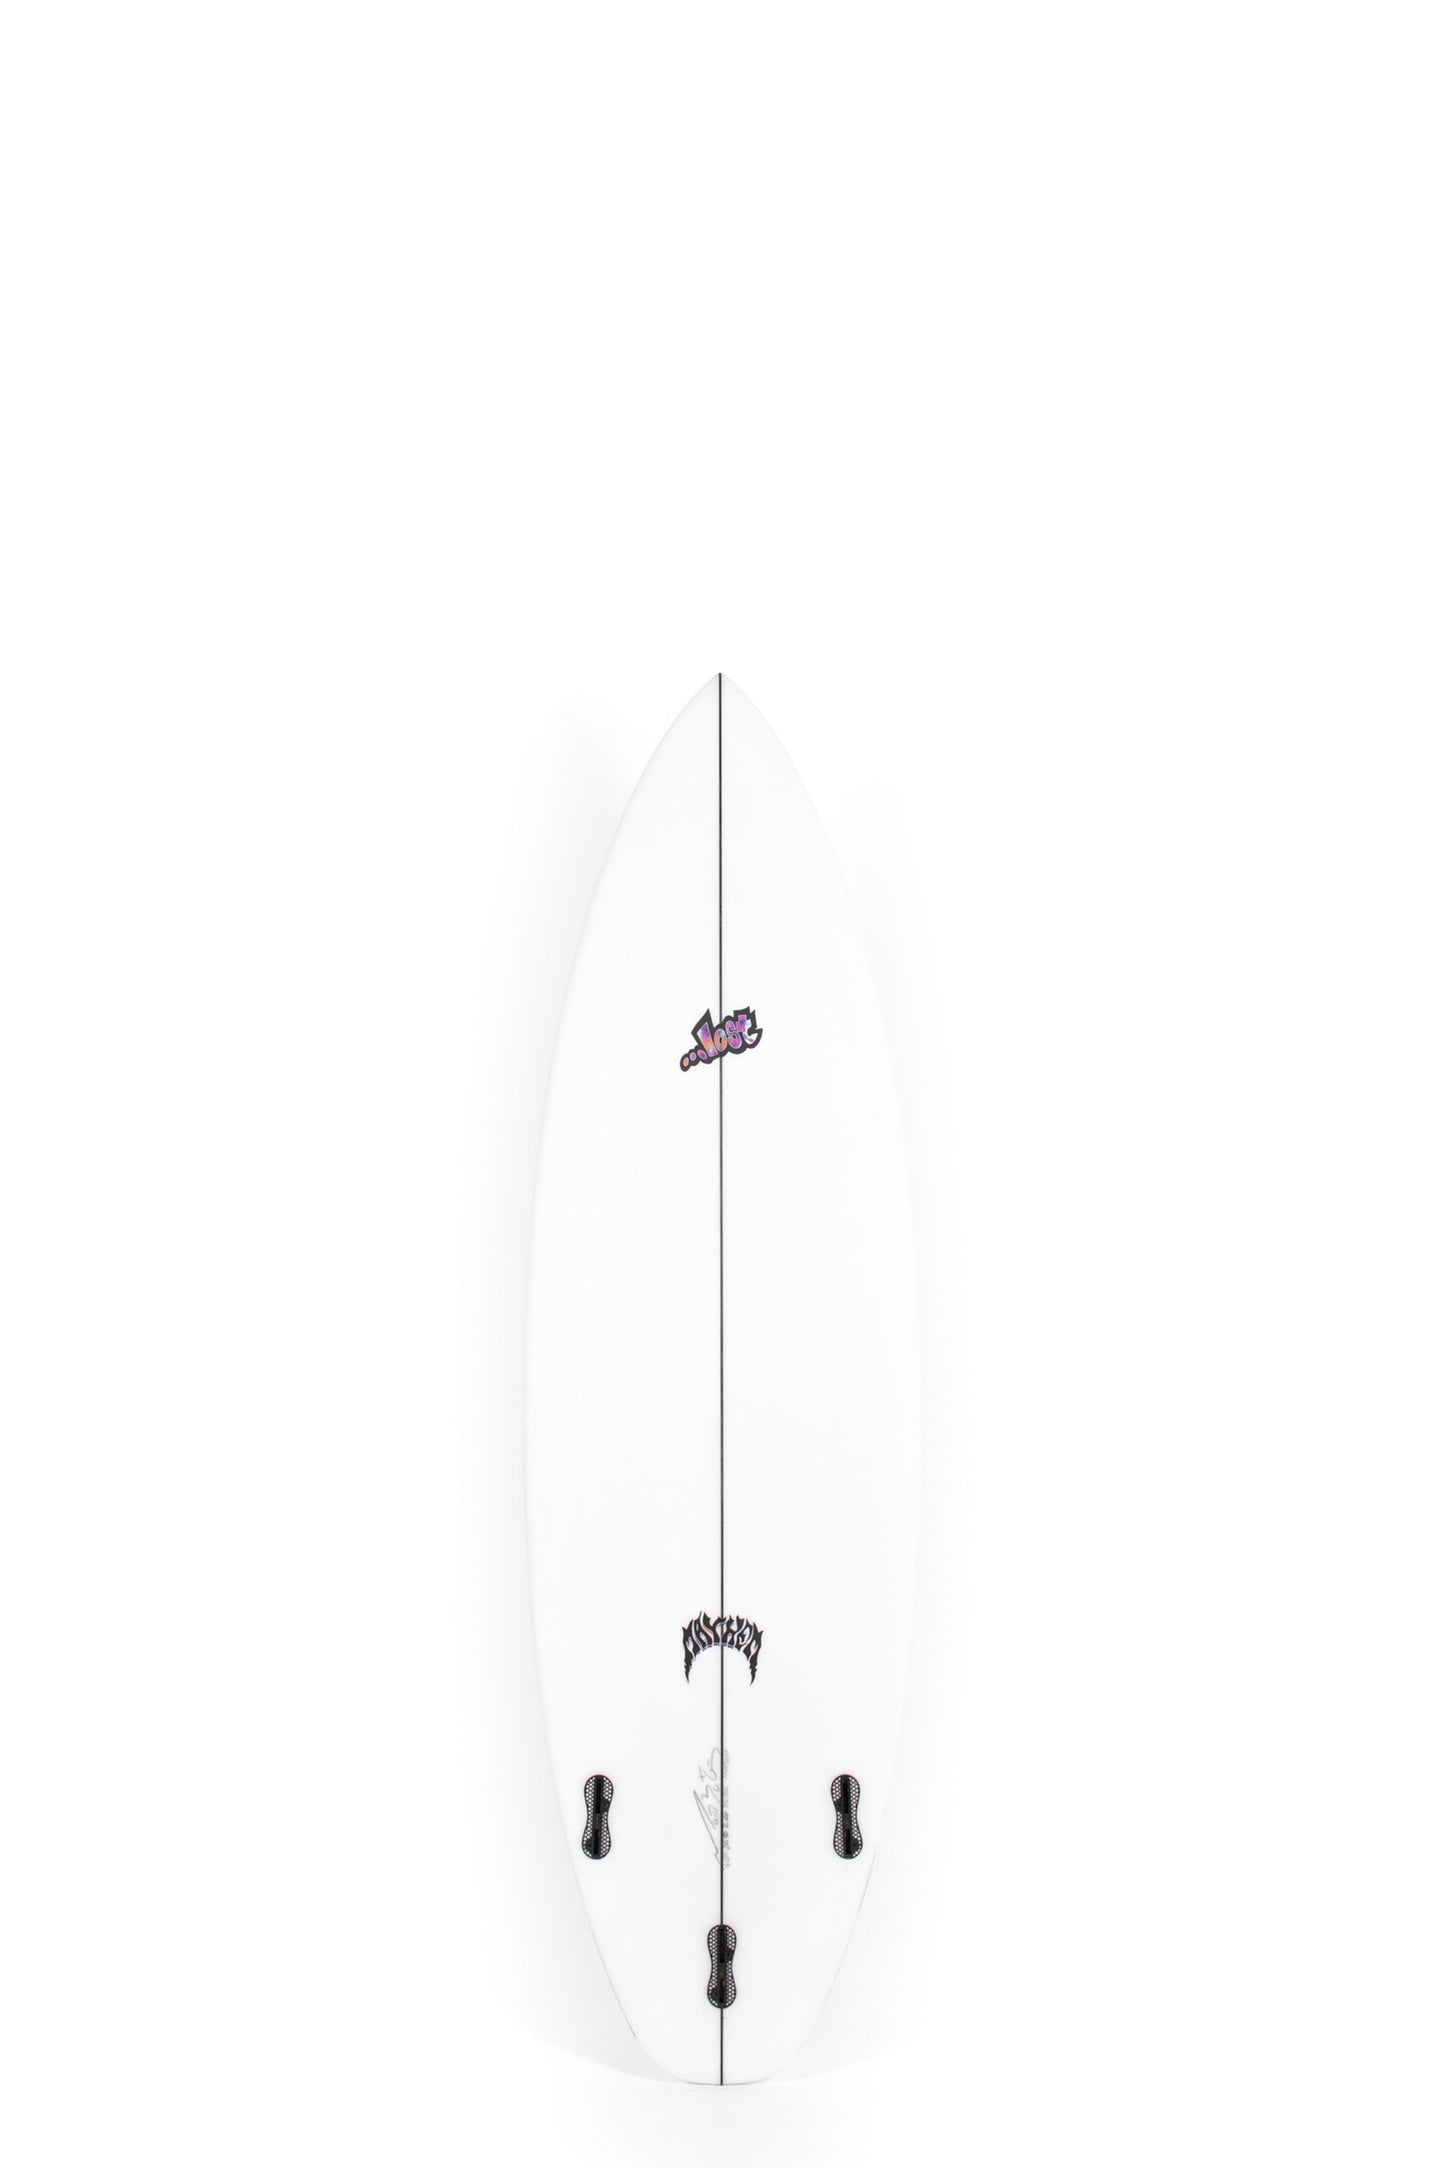 Pukas Surf Shop - Lost Surfboards - LITTLE WING by Matt Biolos - 6’2” x 20'50 x 2,60 - 34'50L - MH15621